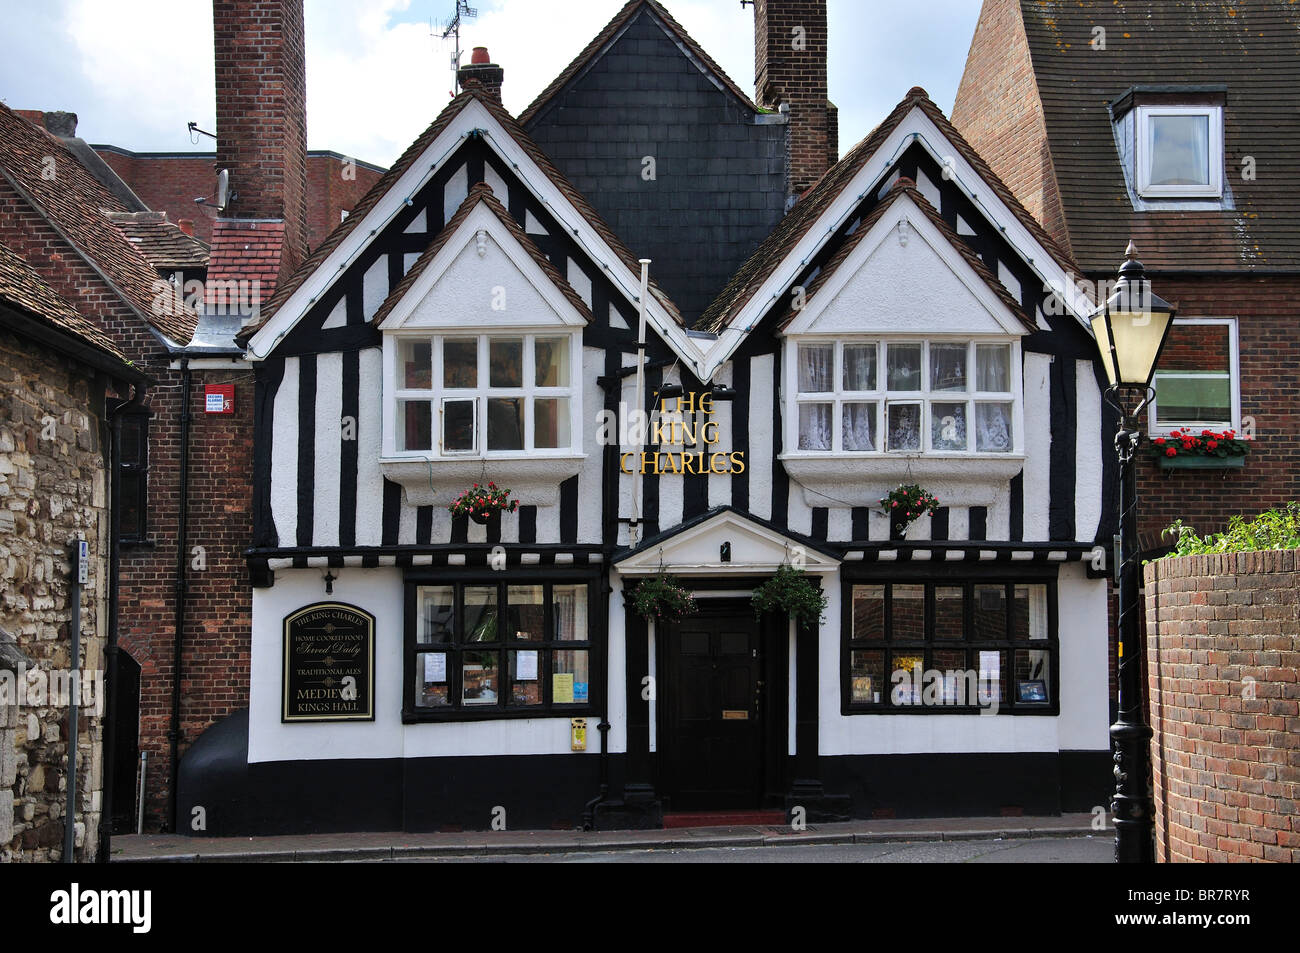 14th century The King Charles Pub, Thames Street, Poole, Dorset, England, United Kingdom Stock Photo